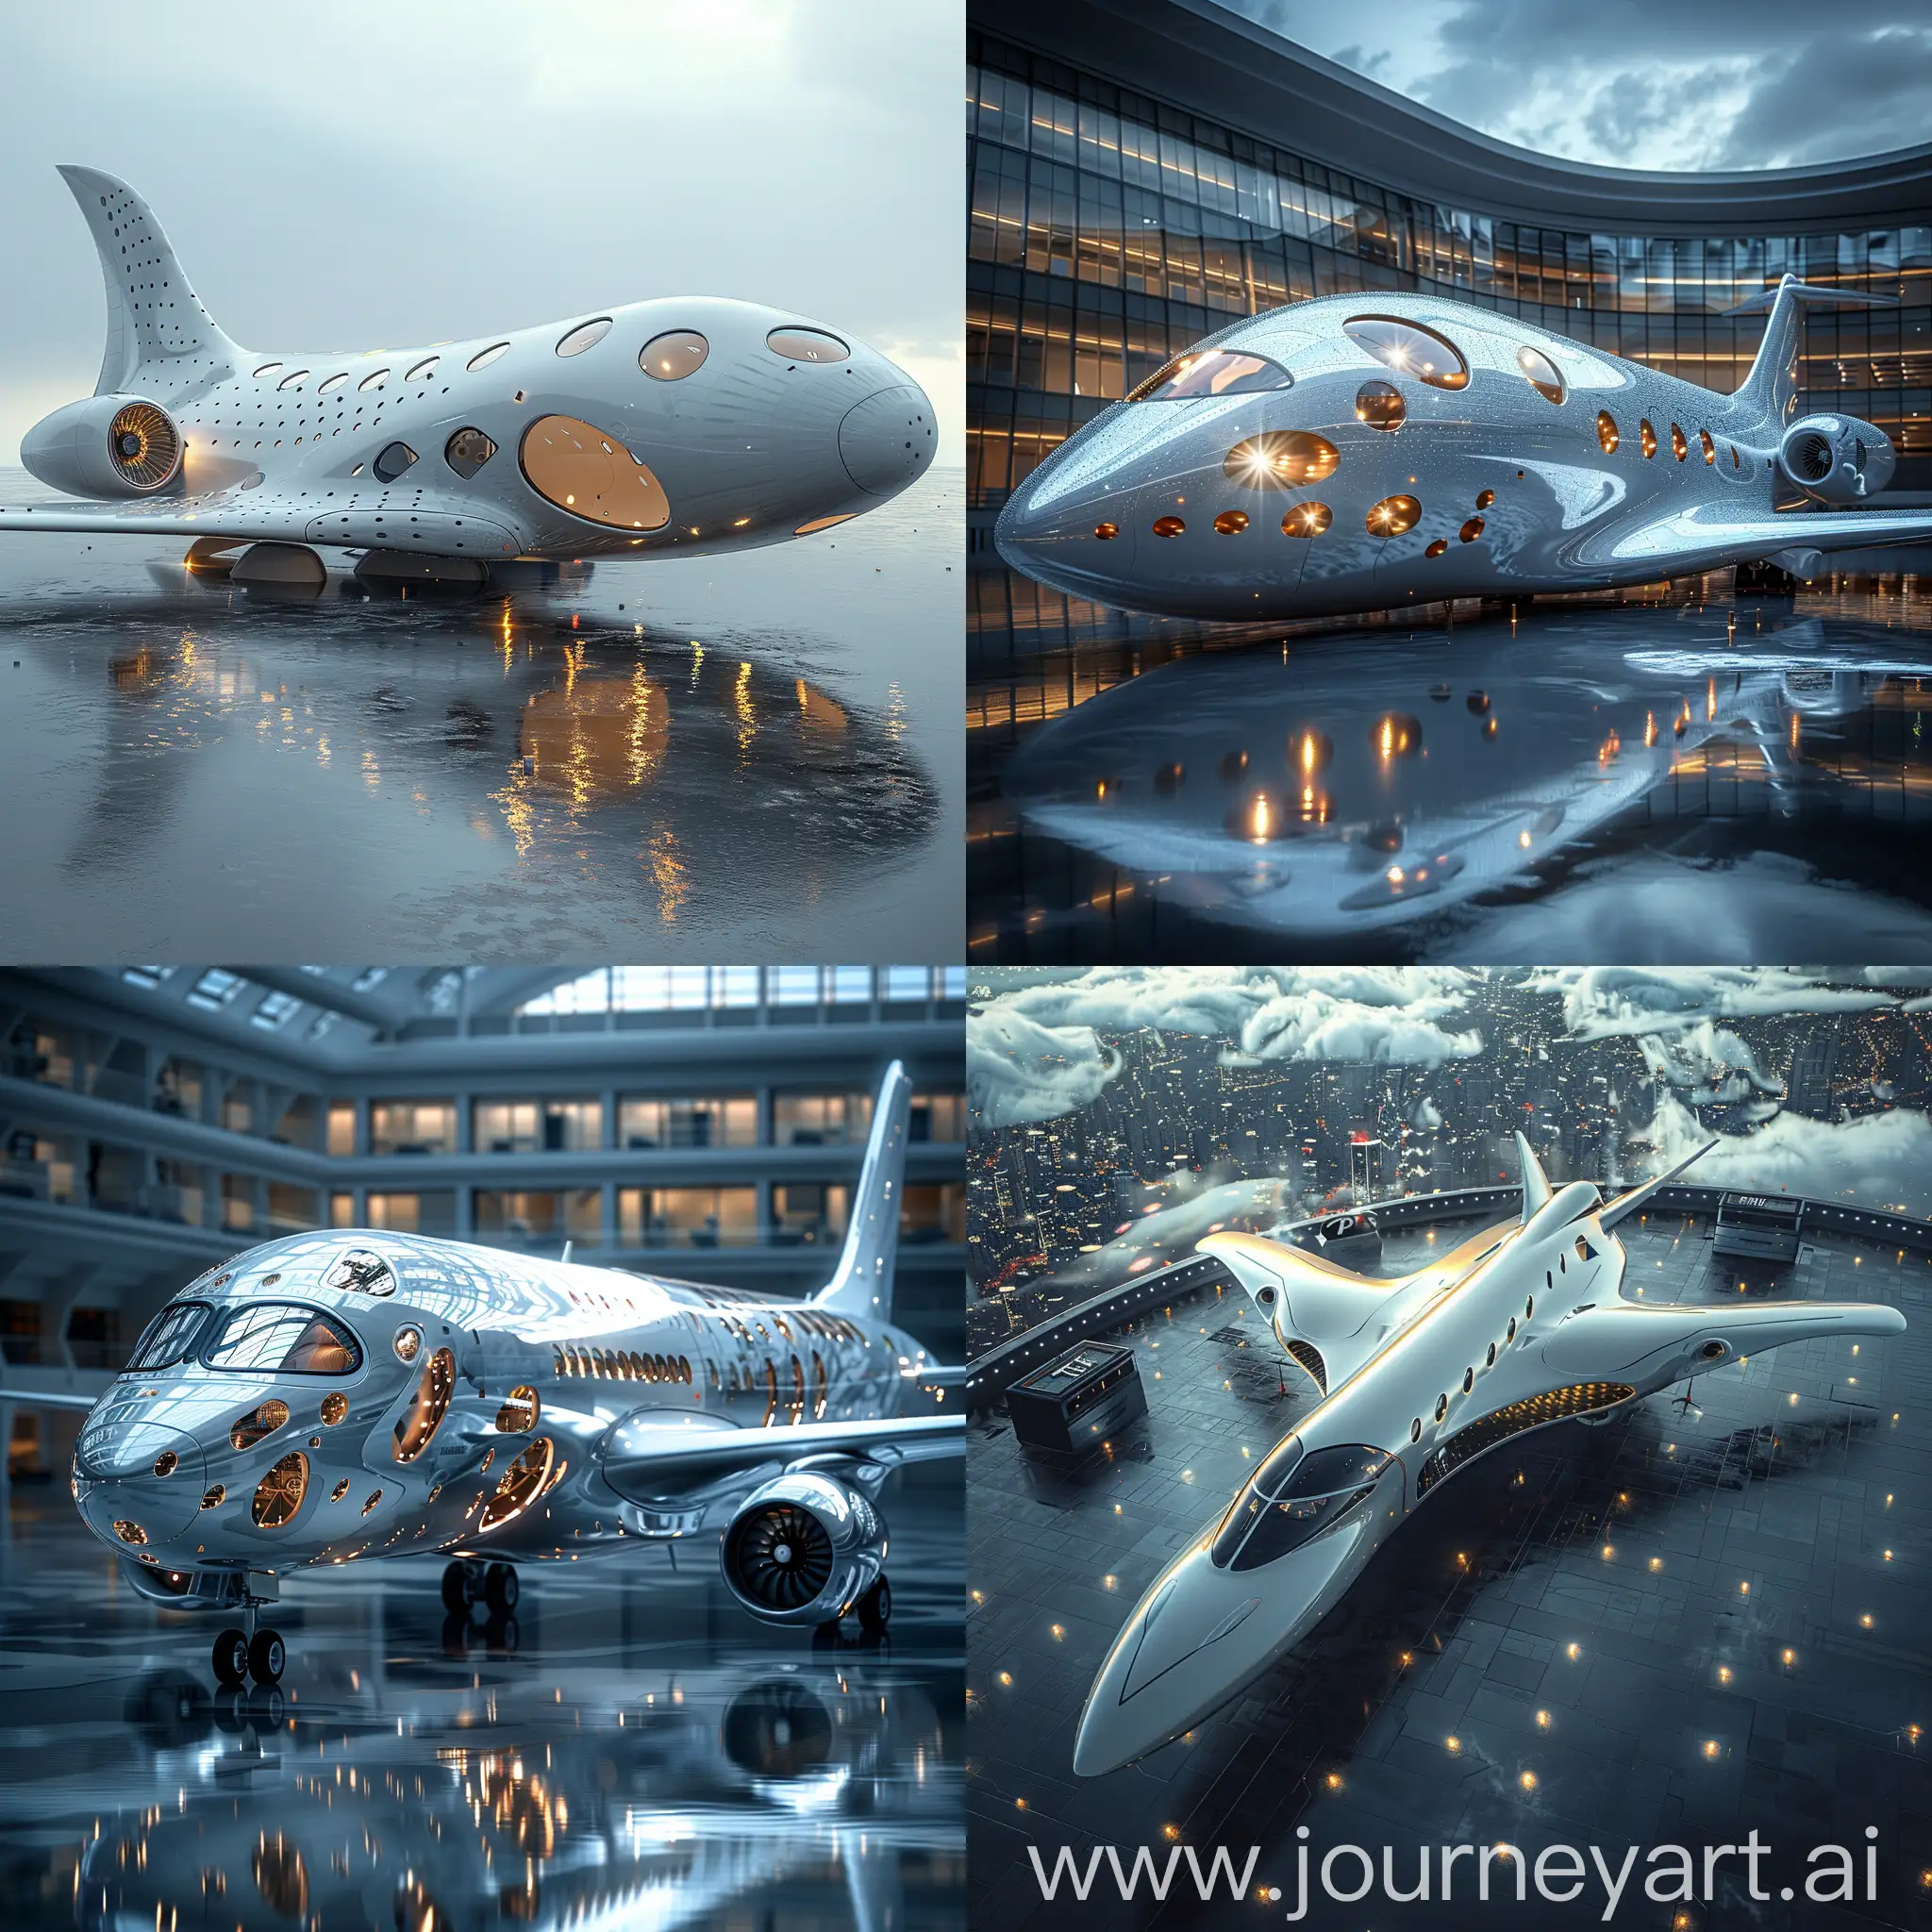 Futuristic-UltraModern-Passenger-Aircraft-with-Smart-Metals-and-HighTech-Design